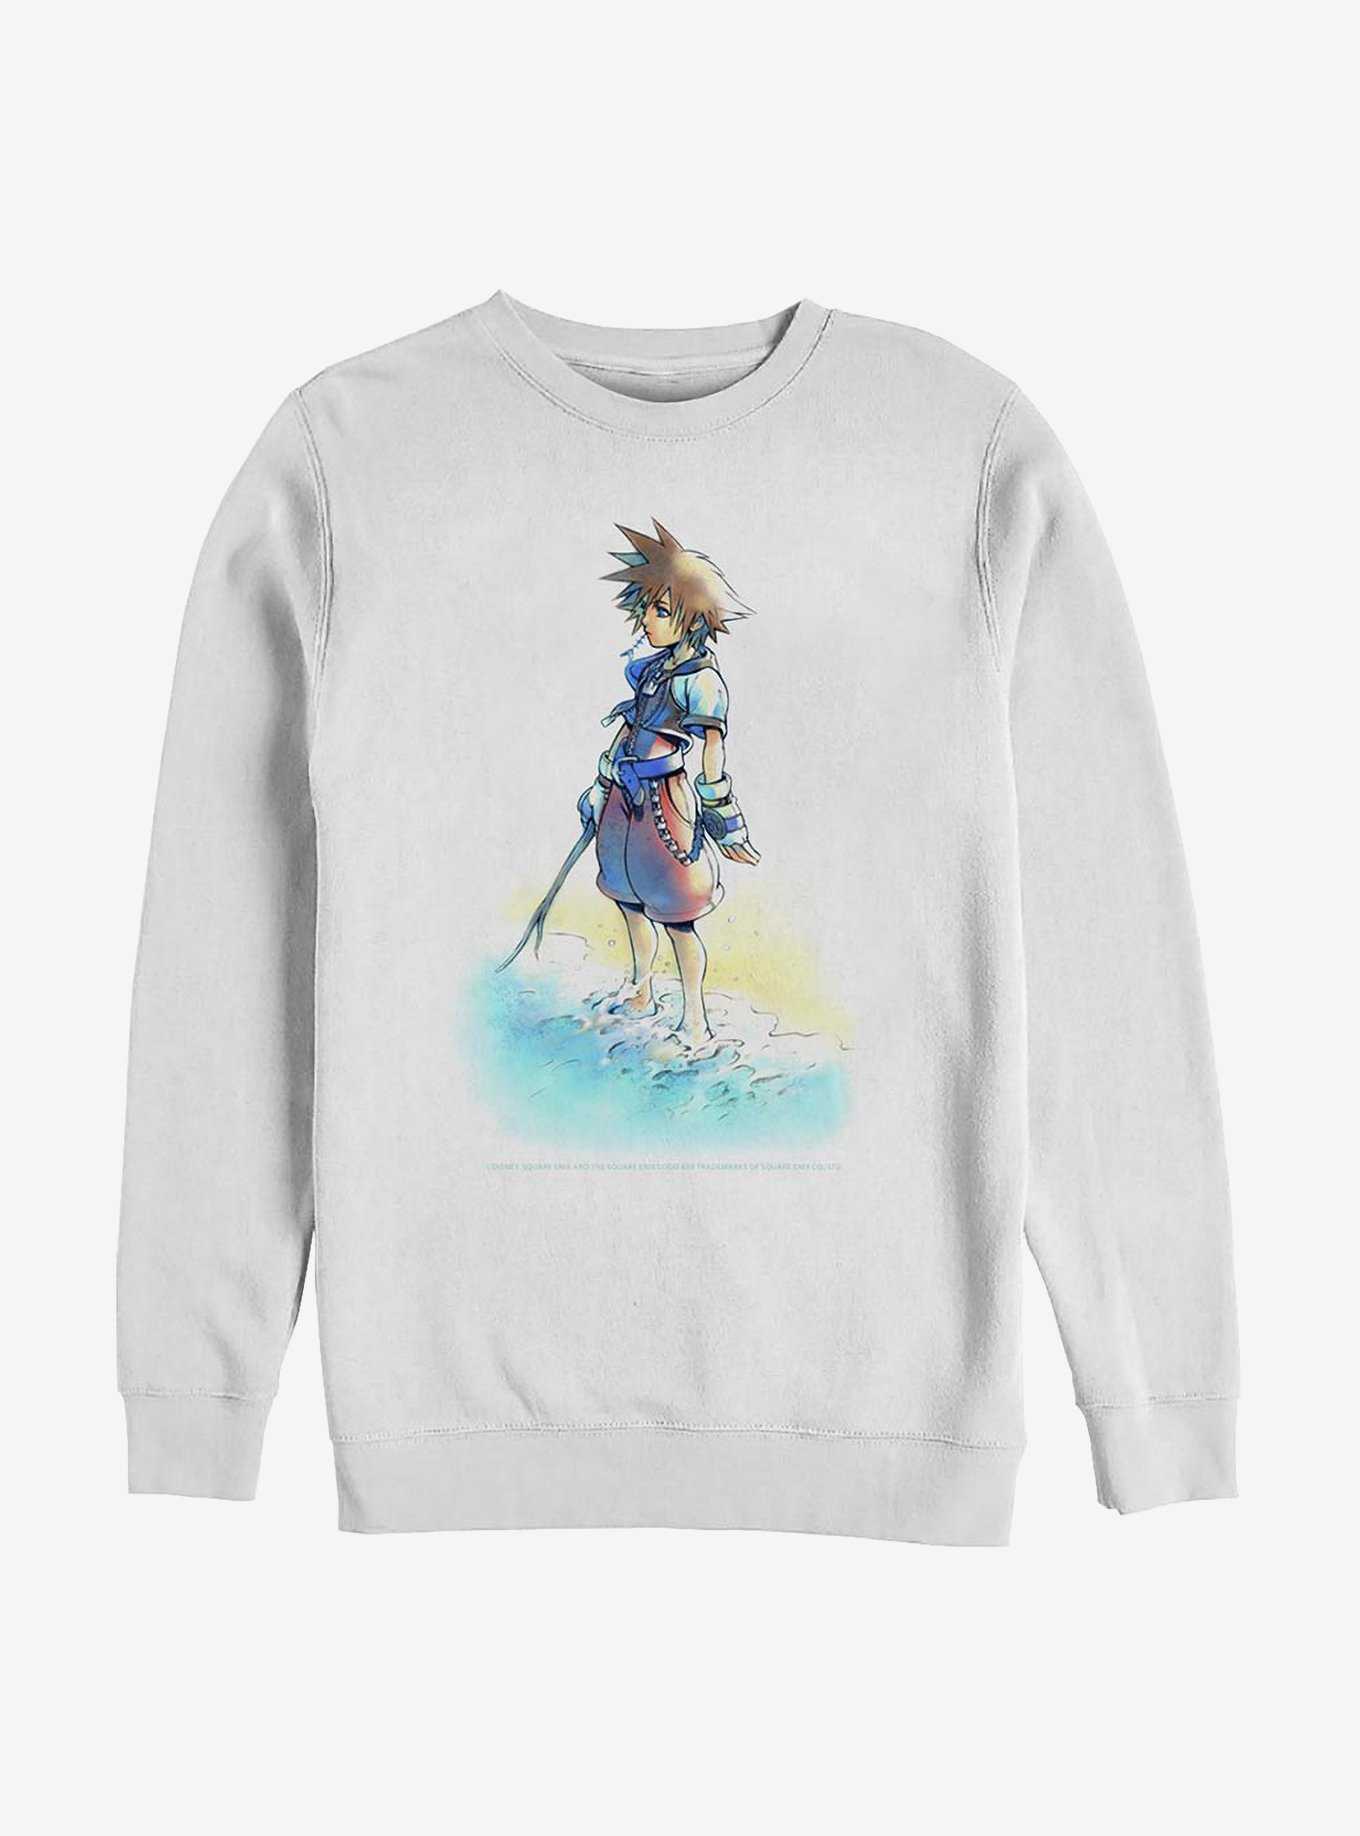 Disney Kingdom Hearts Beach Sora Crew Sweatshirt, , hi-res